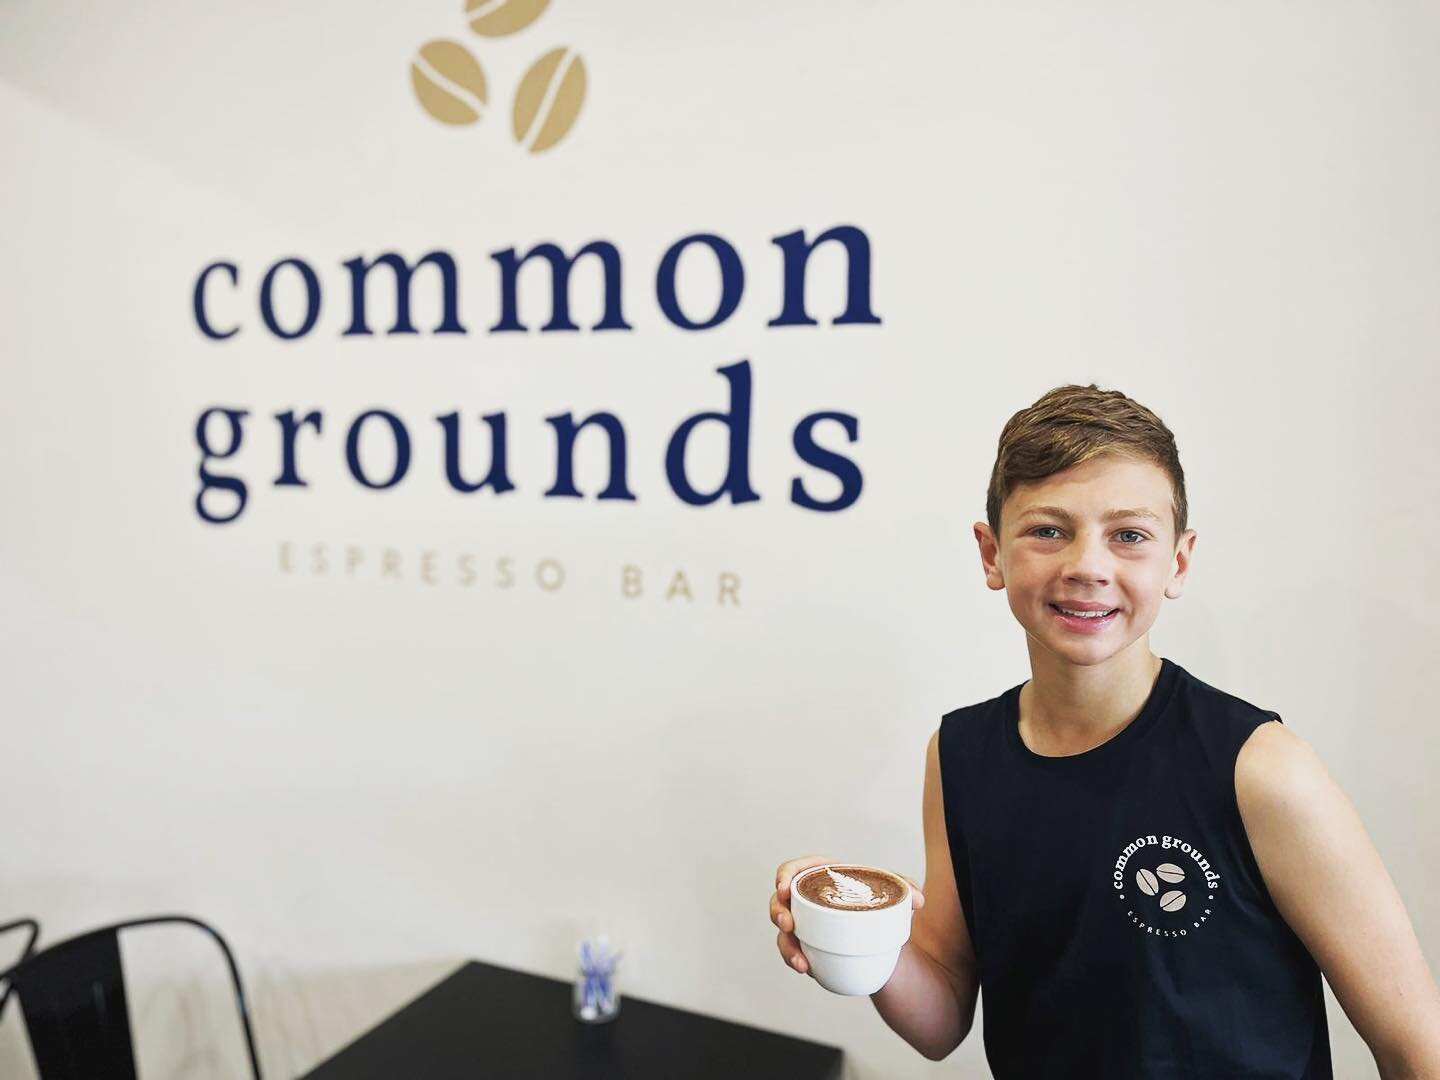 CG&rsquo;s first ever customer sporting his  official merch 🥳☕️🙌 @mrsheff @heffernanbrett 

#coffee #number1 #espressobar #gymea #sutherlandshire